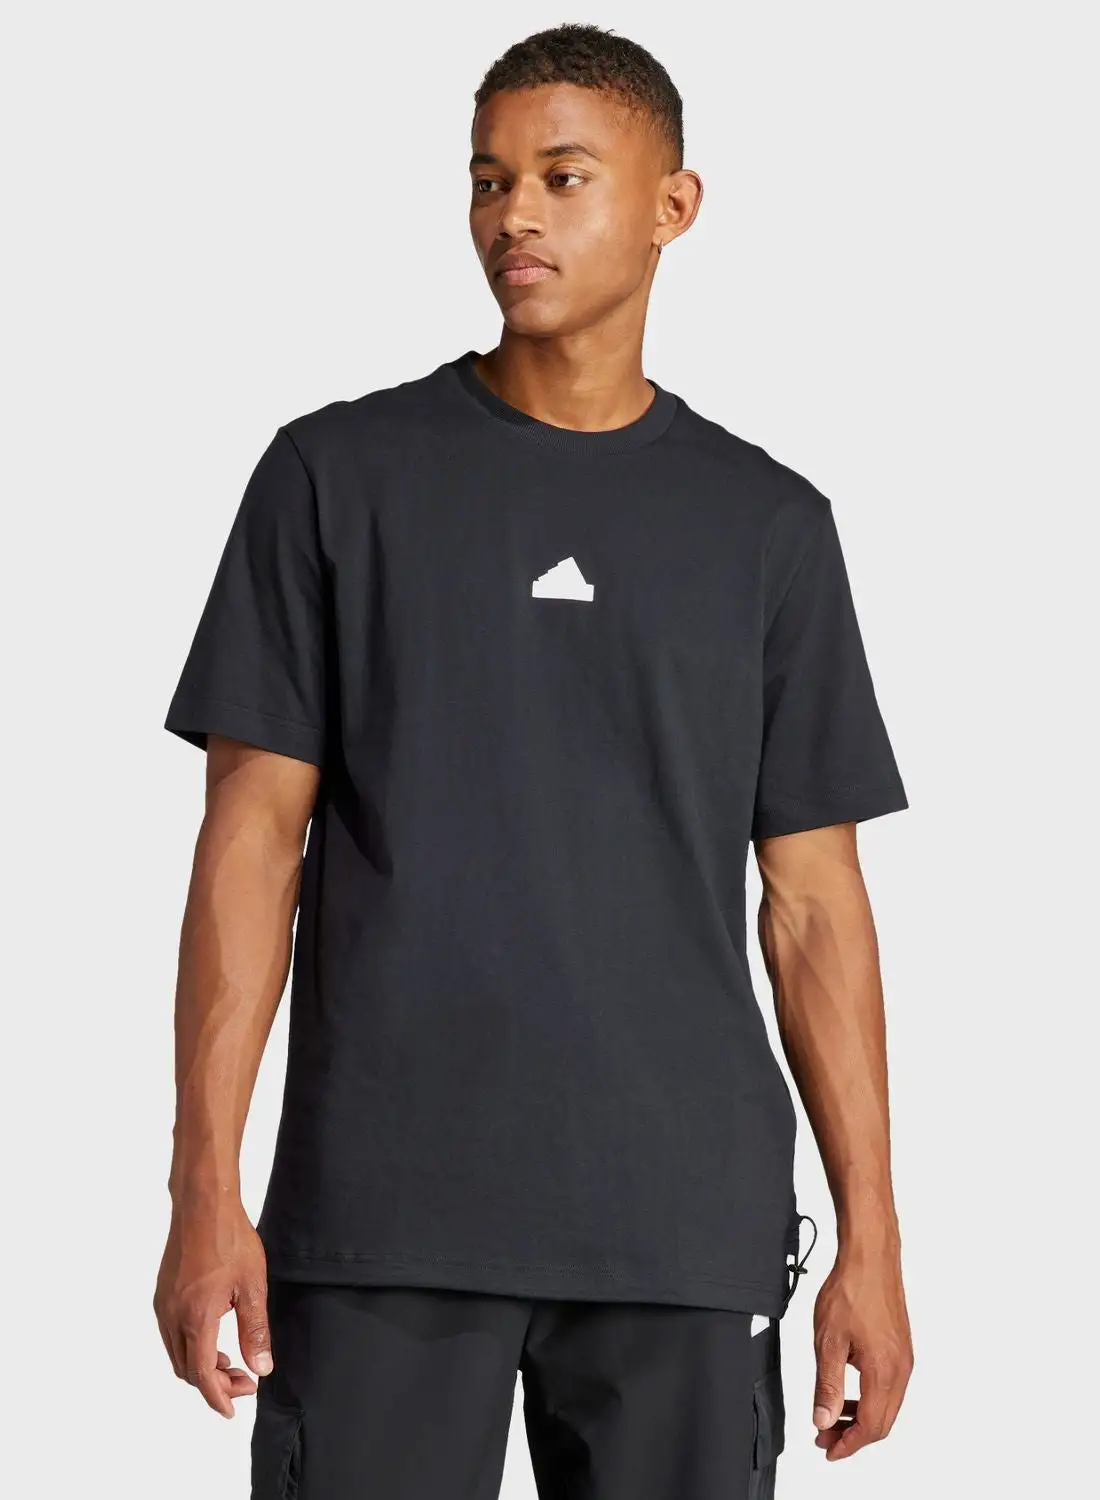 Adidas City Escape Q1 T-Shirt